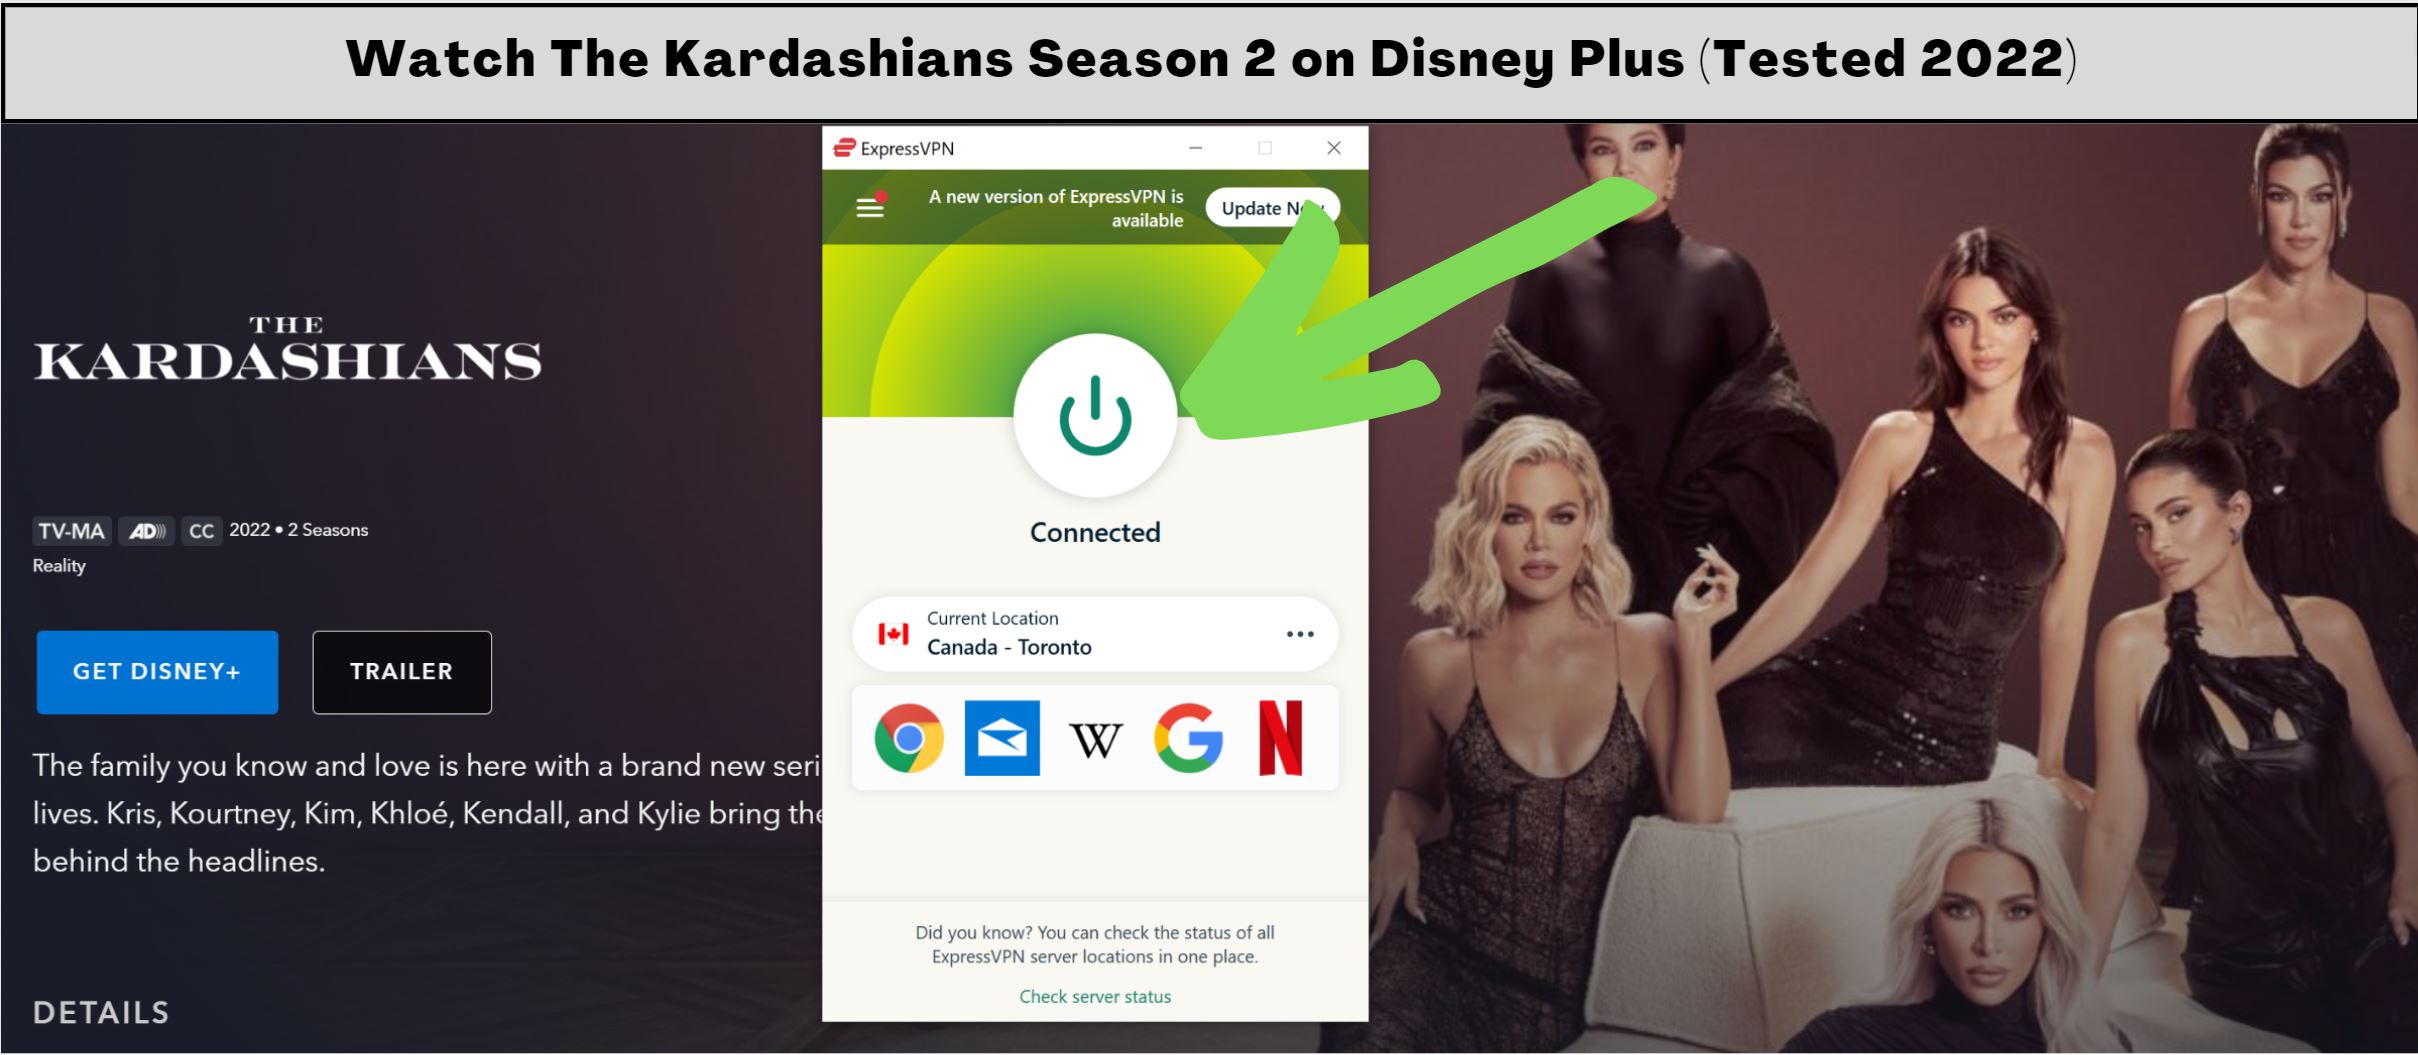 Watch The Kardashians Season 2 (2022) in the United States on Disney+